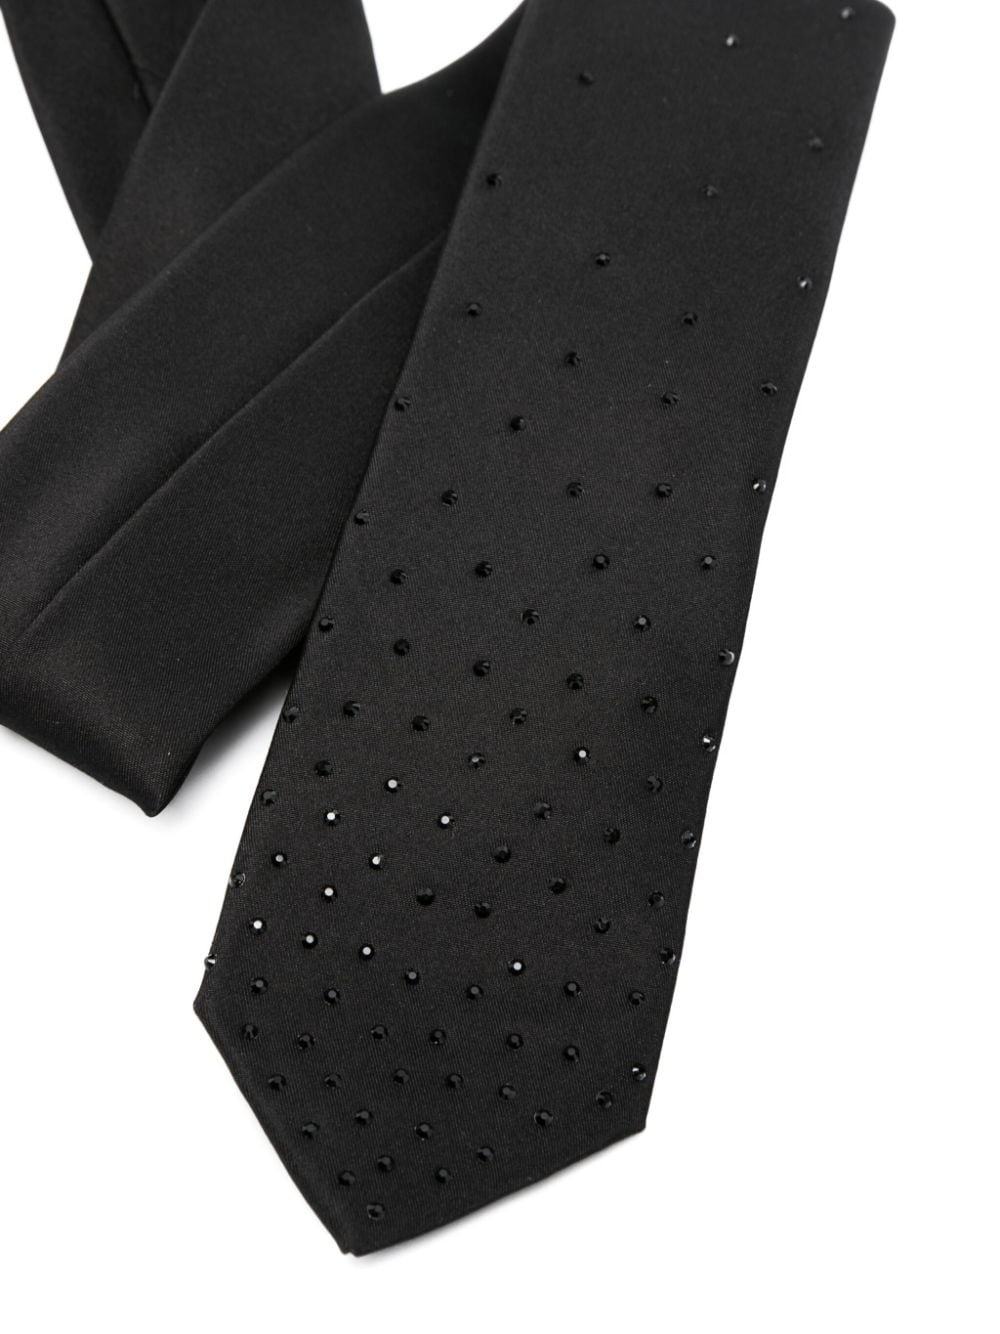 rhinestone-embellished silk tie - 2